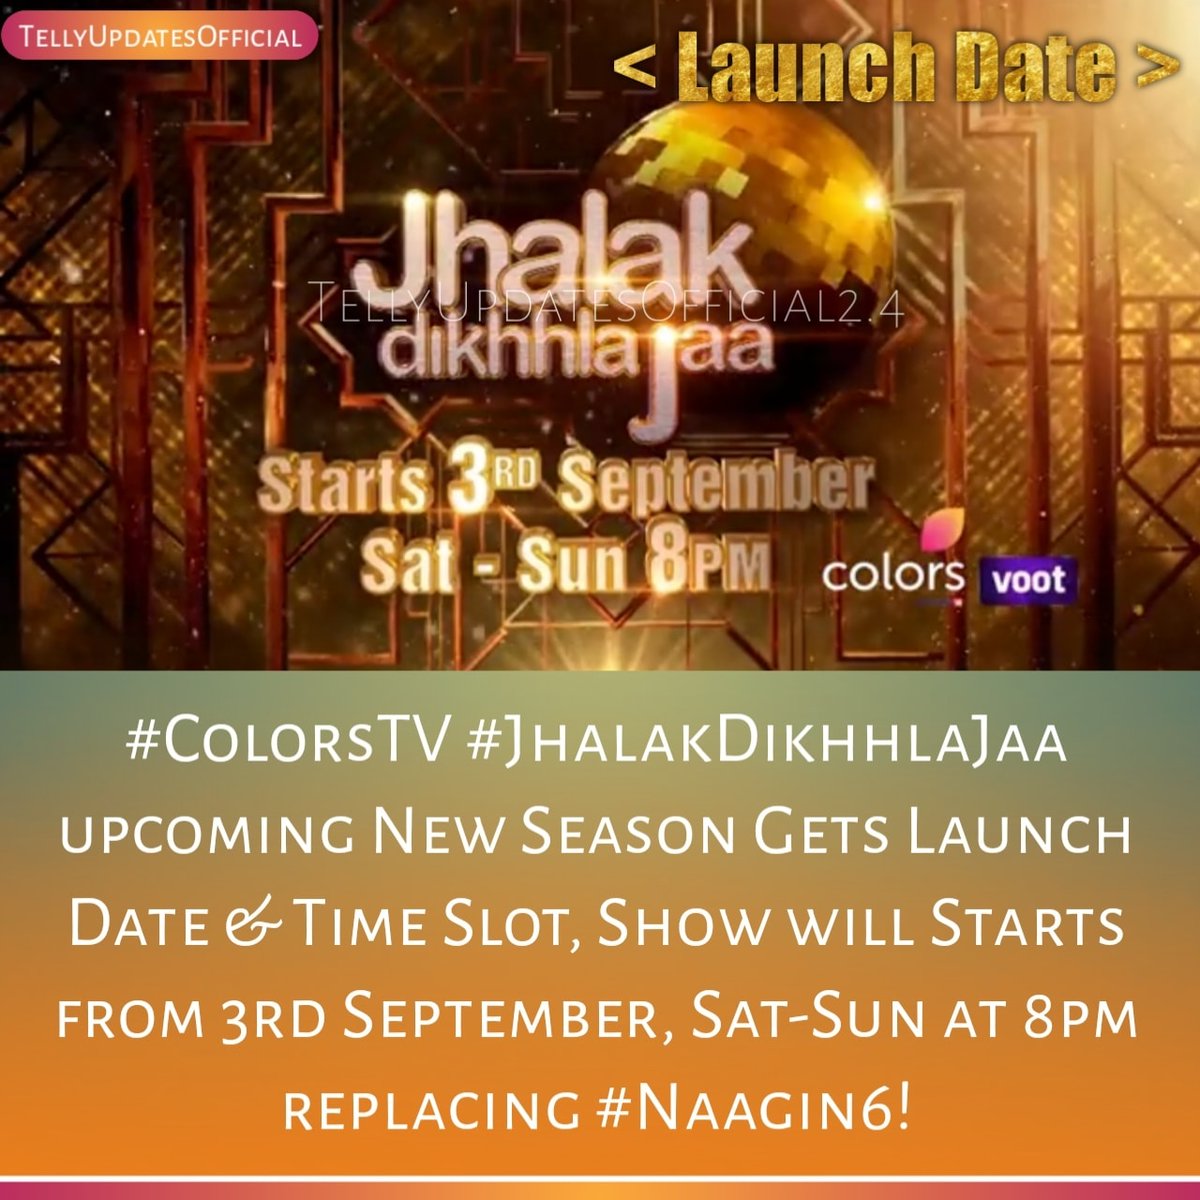 #SuperExclusive BREAKING NEWS @ColorsTV #JhalakDikhhlaJaa upcoming New Season Gets Launch Date & Time Slot, Show will Starts from 3rd September, Sat-Sun at 8pm replacing #Naagin6! @TellyupdatesO #ColorsTV #Jhalak #MadhuriDixit #NoraFatehi #KaranJohar #JhalakDikhlaJaa10